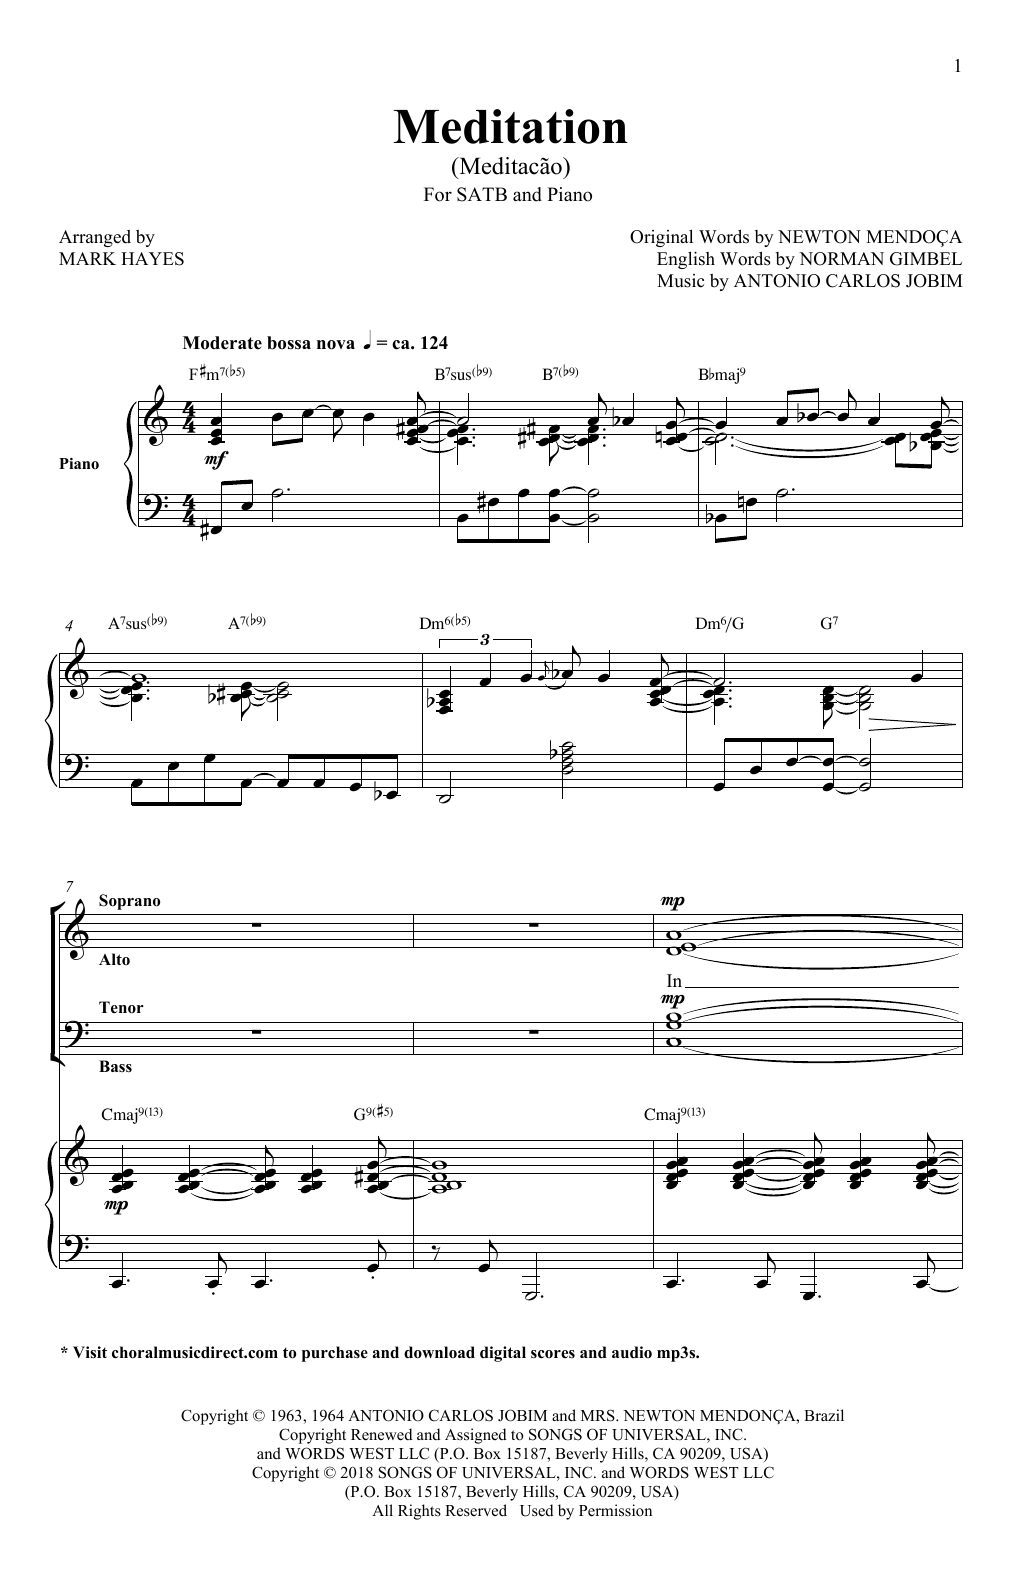 Antonio Carlos Jobim Meditation (Meditacao) (arr. Mark Hayes) Sheet Music Notes & Chords for SATB Choir - Download or Print PDF